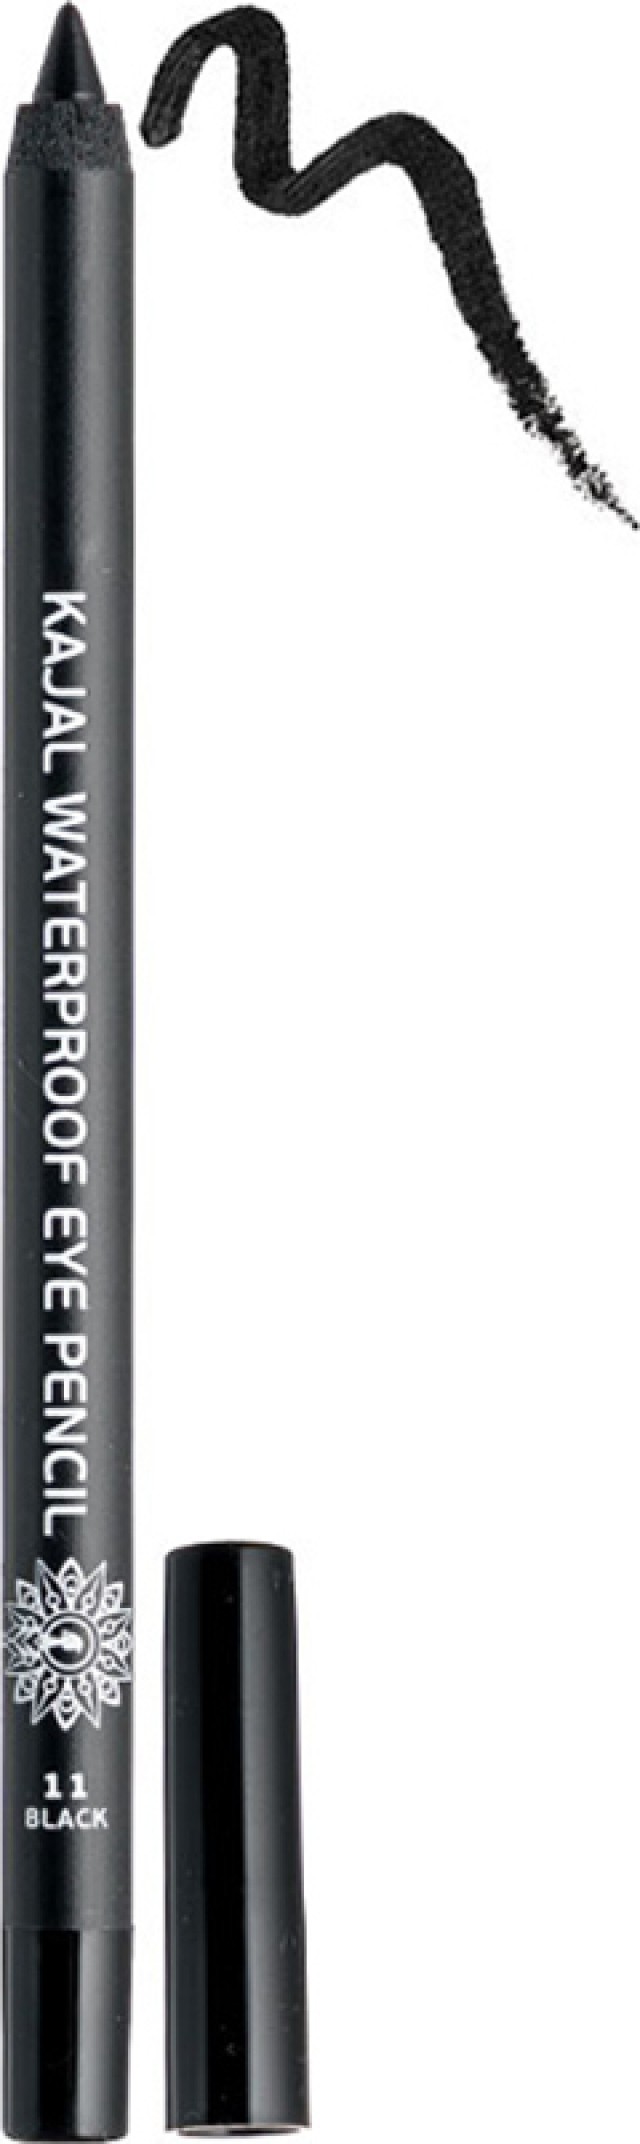 GARDEN Kajal Waterproof Eye Pencil 11 Black, Αδιάβροχο Μολύβι Ματιών 1.4g